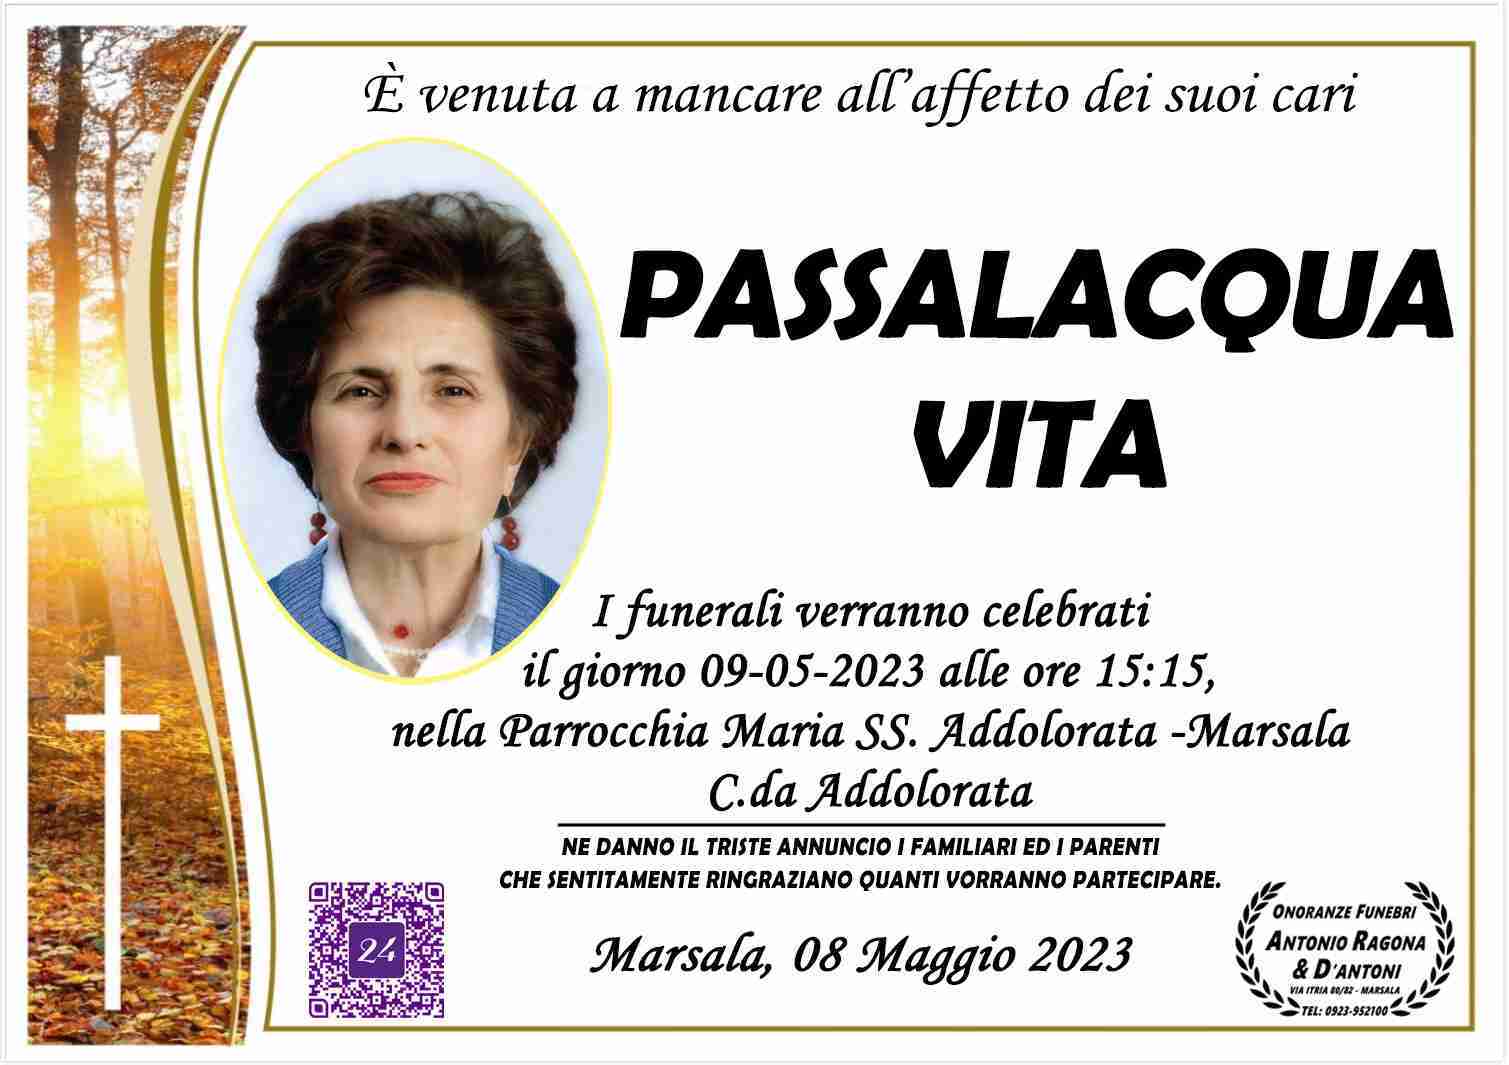 Vita Passalacqua